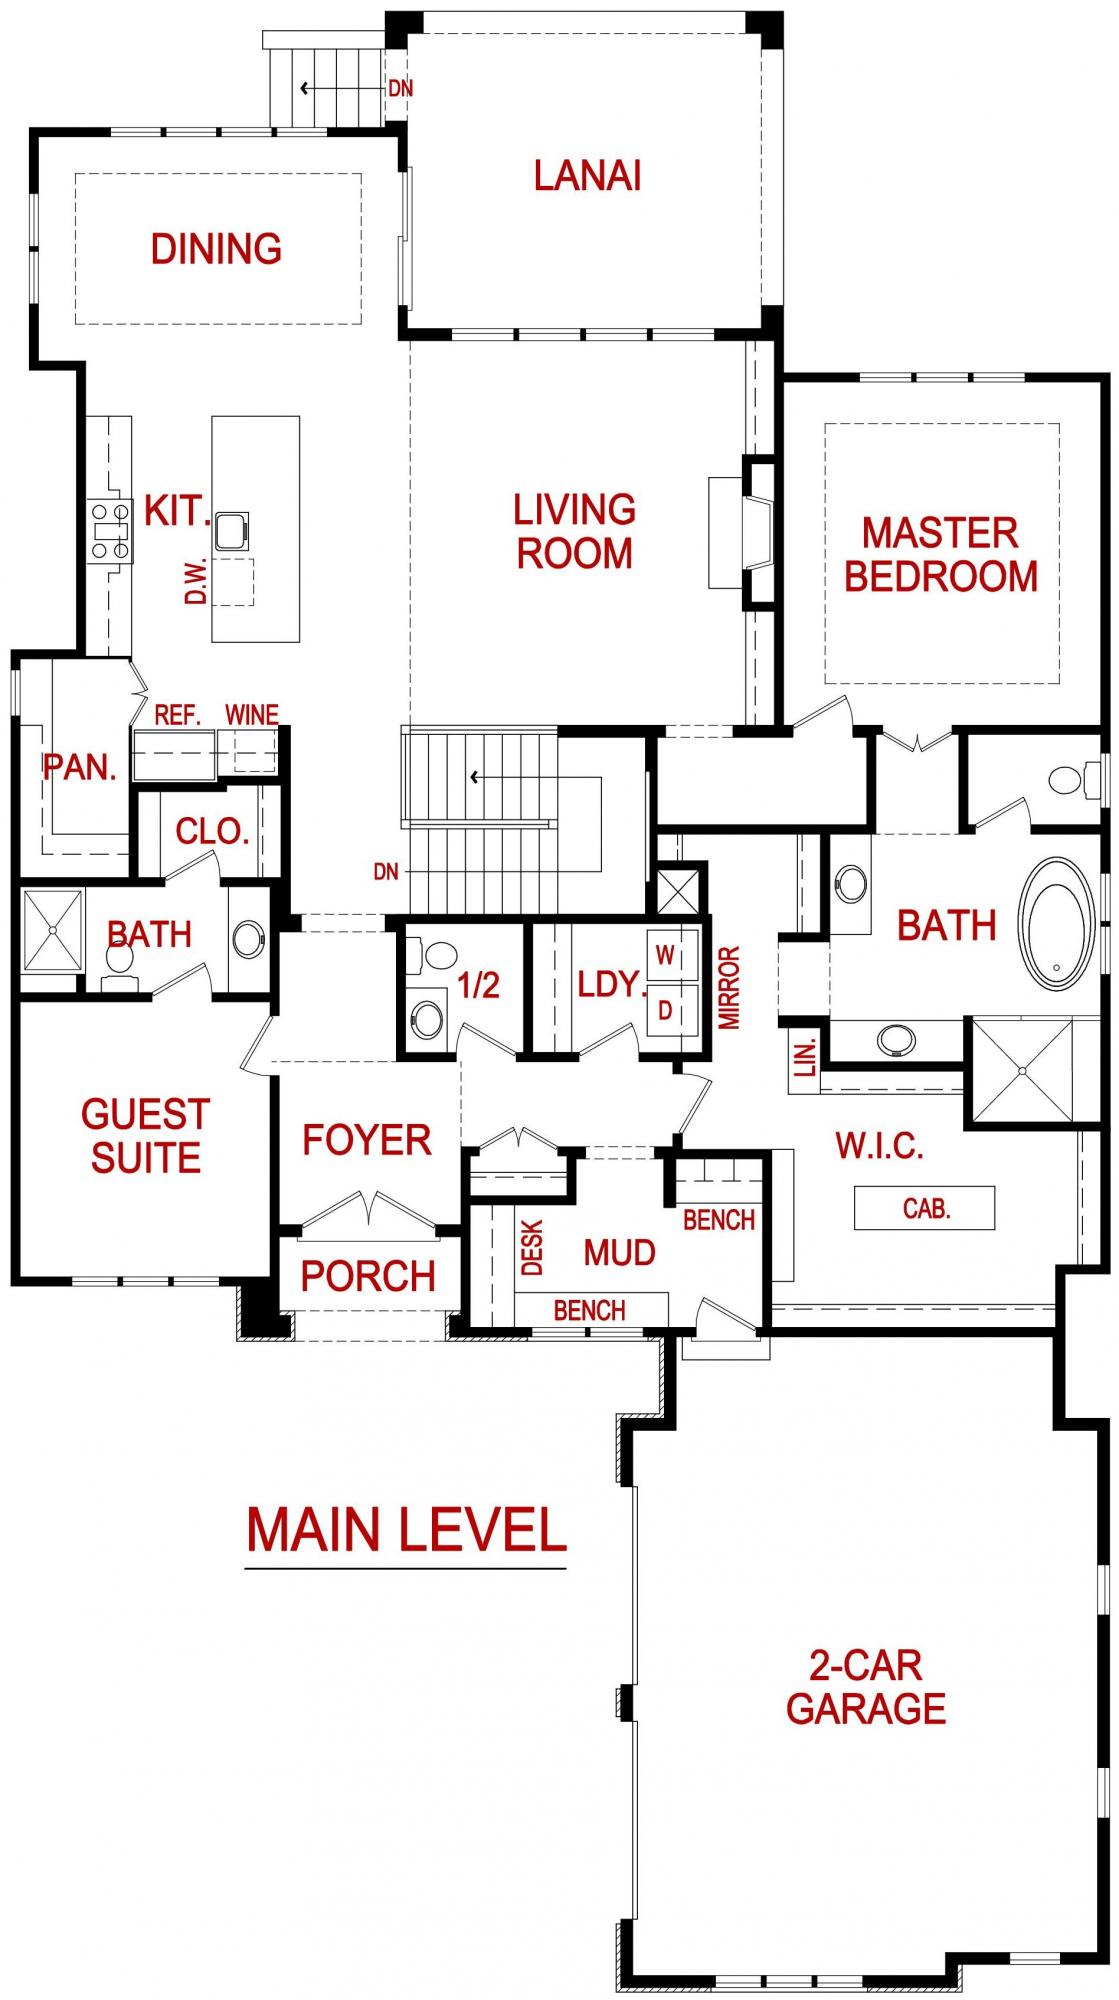 Barrington model main level floor plan from Lambie Homes